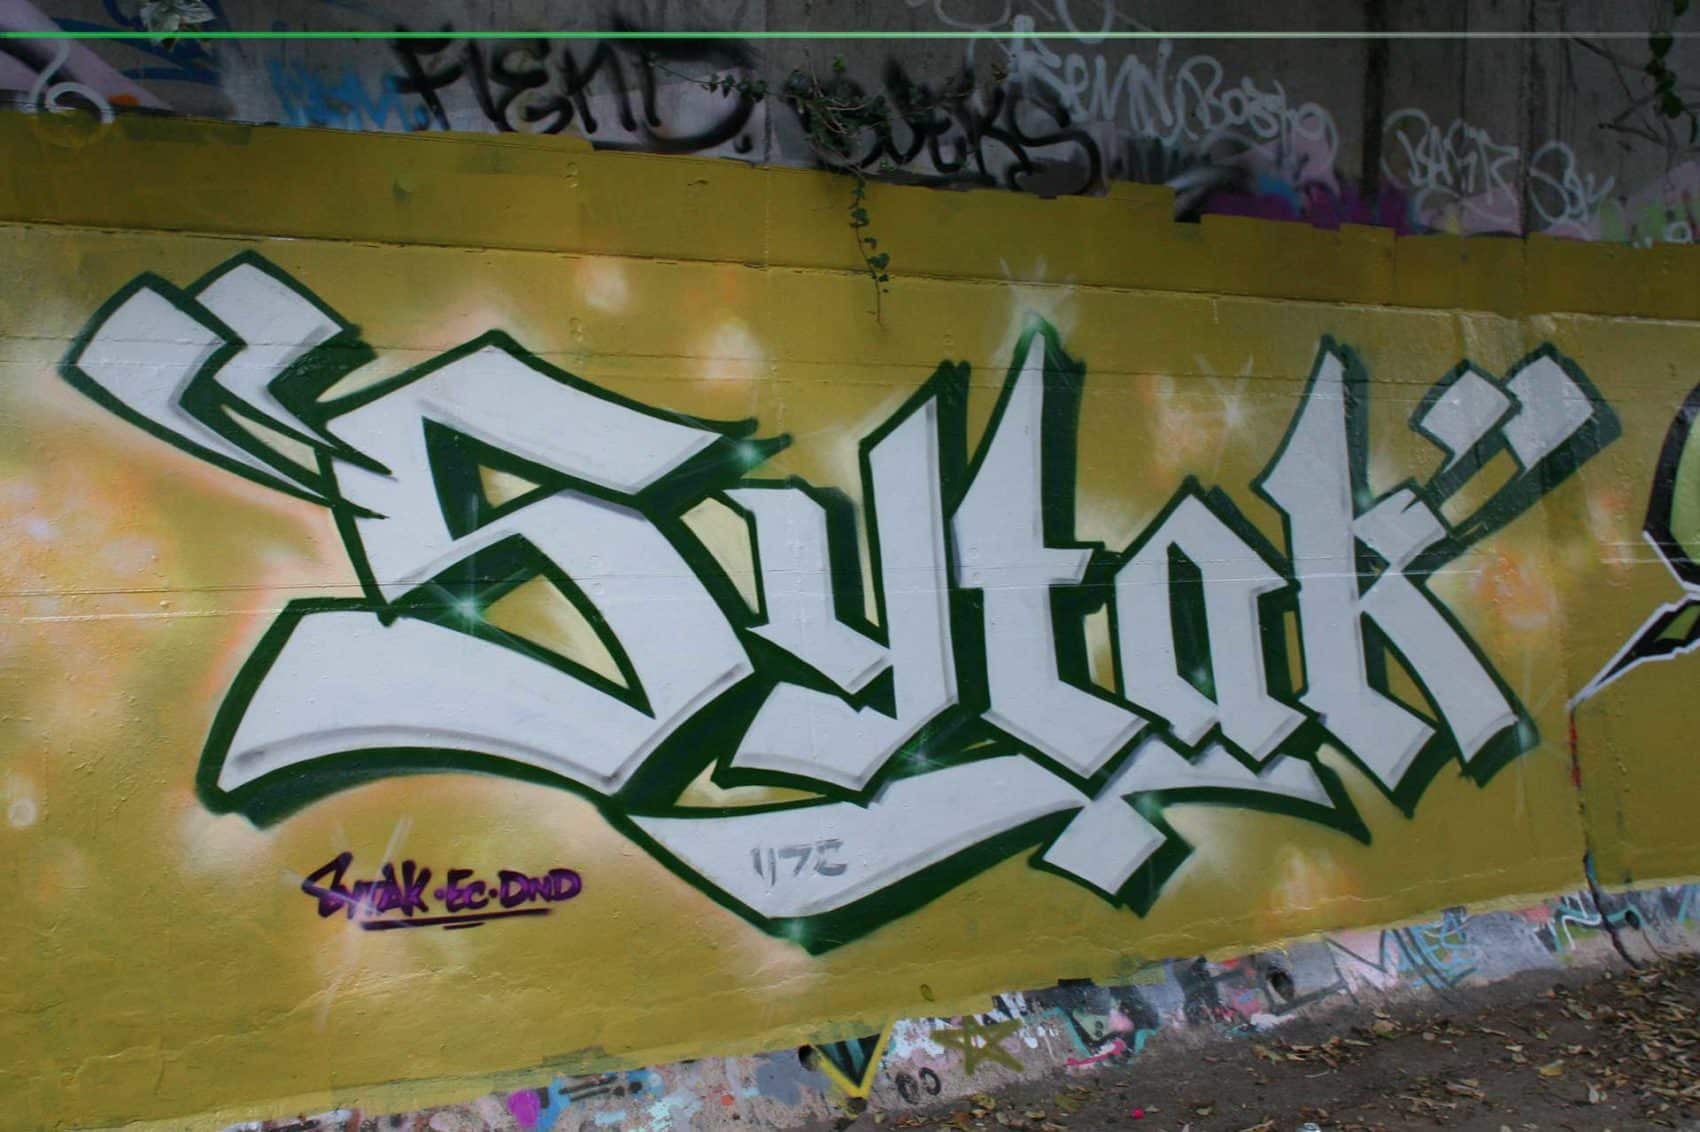 sytak graffiti artist sydney